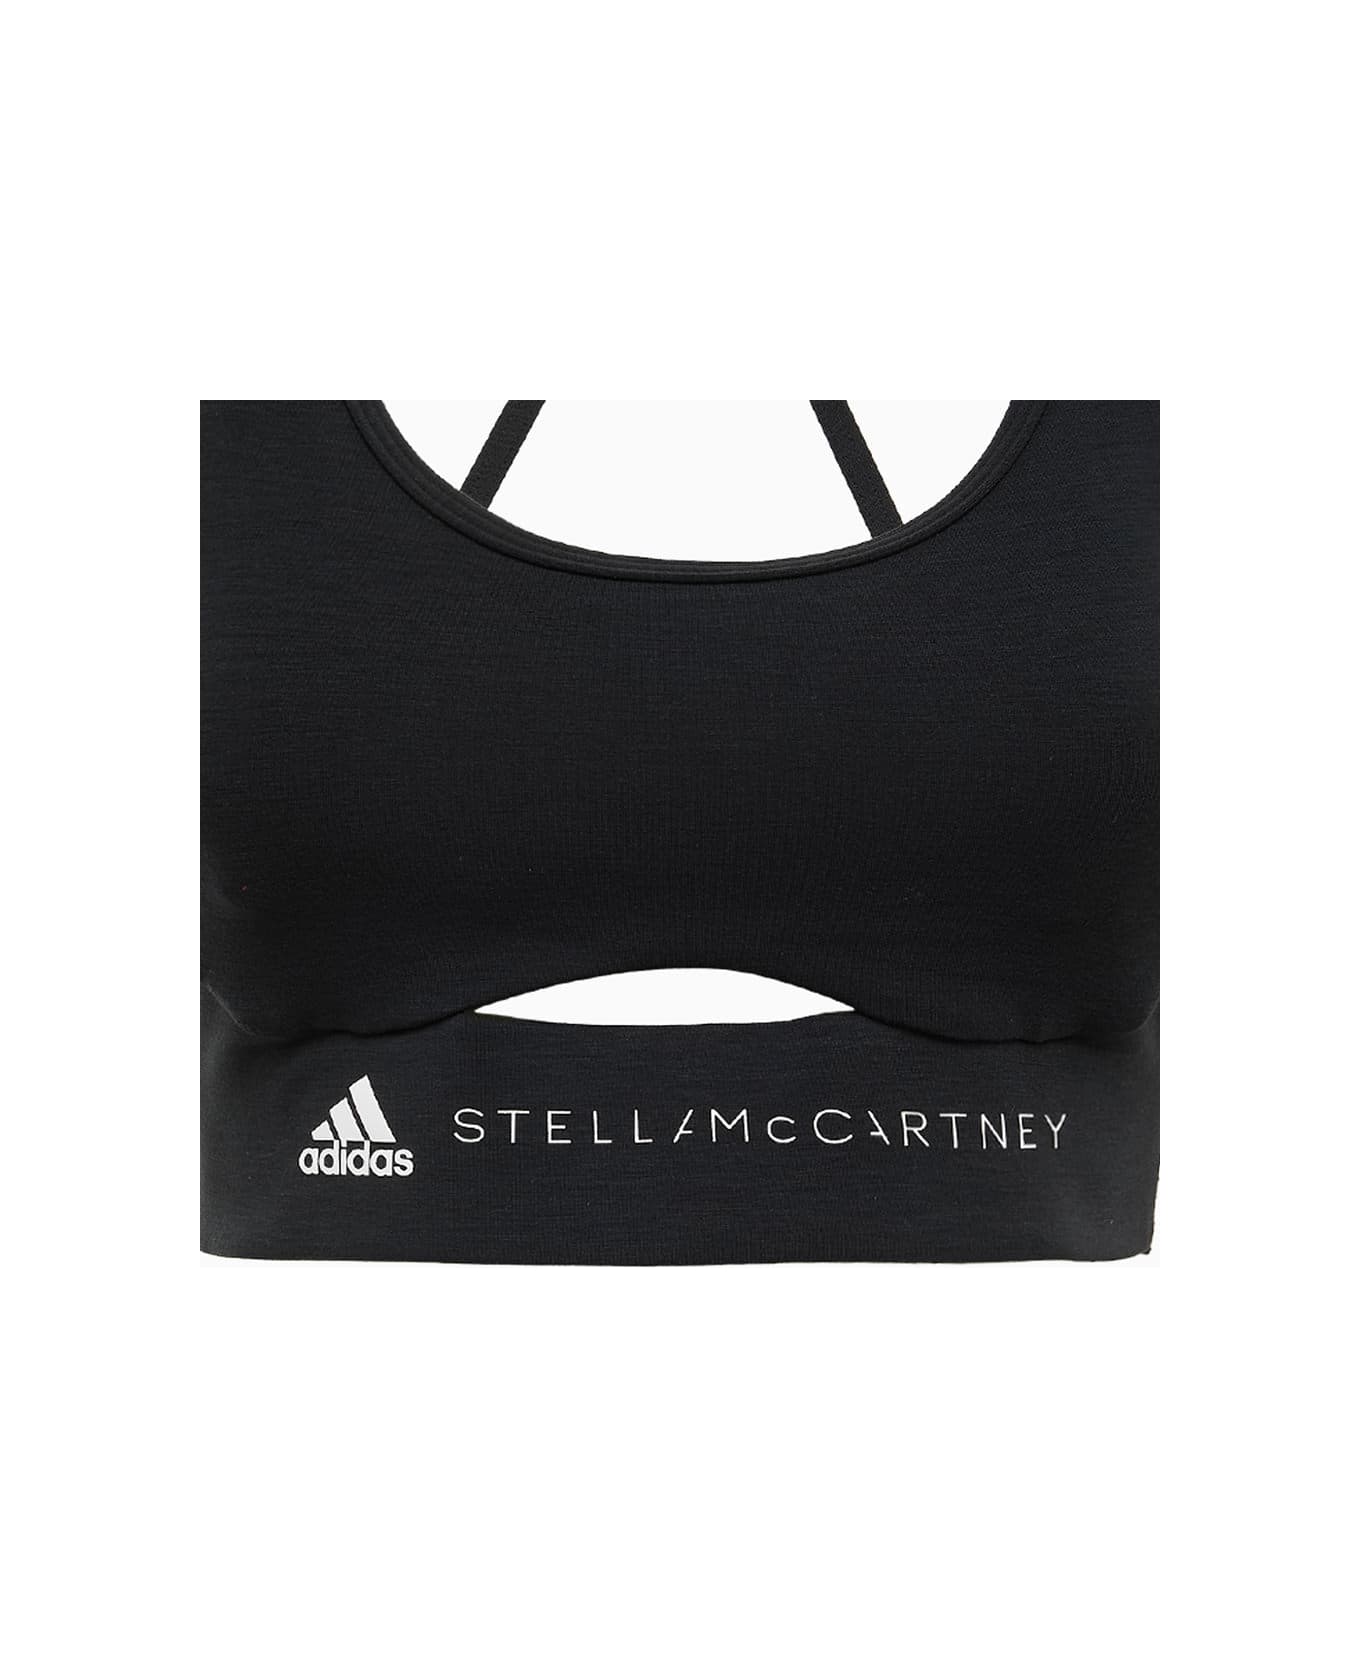 Adidas by Stella McCartney Top Hr2192 - BLACK/WHITE トップス